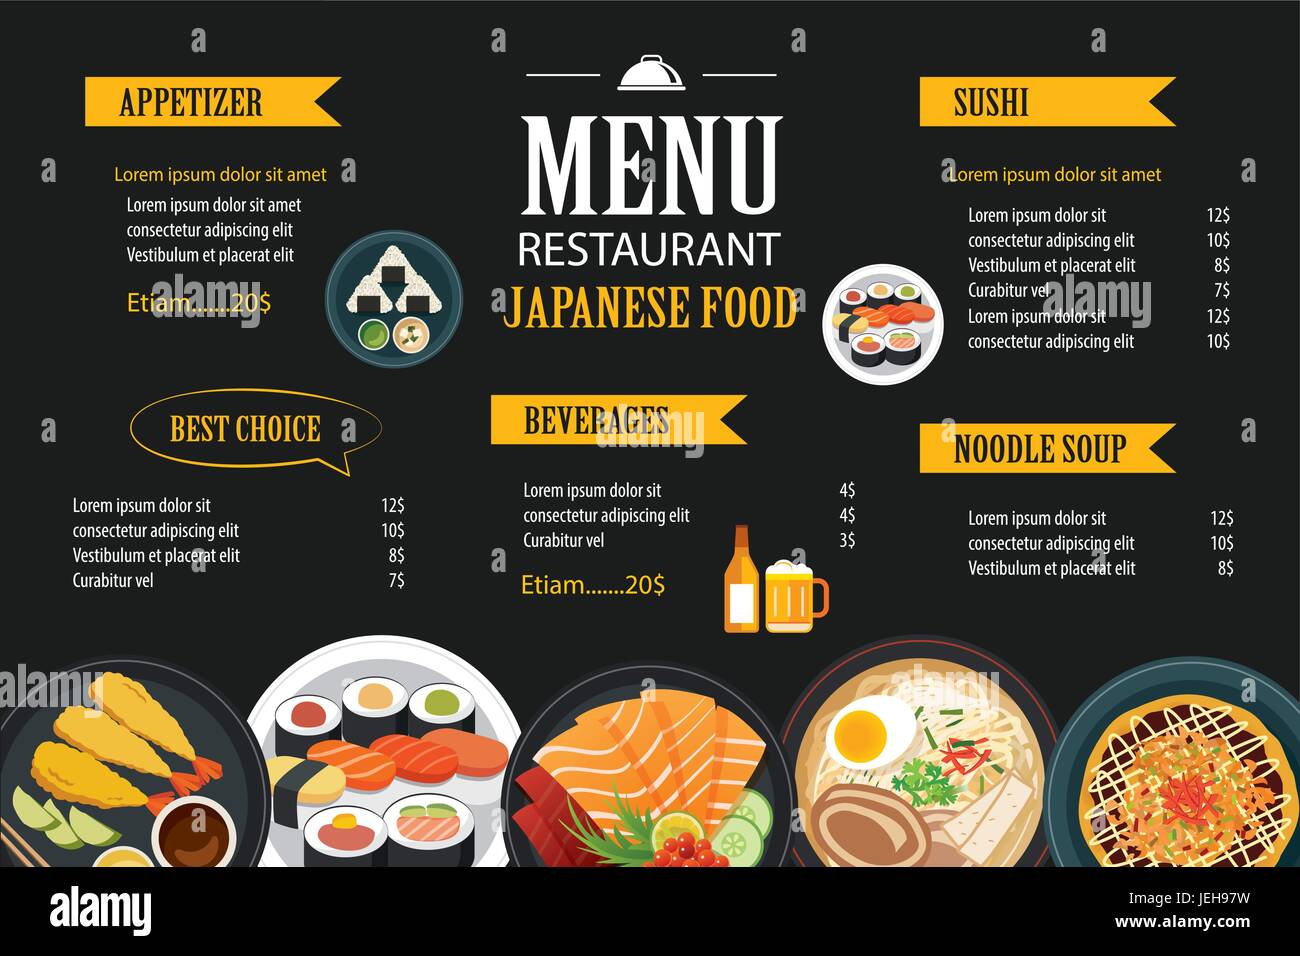 Japanese Food Menu Restaurant Brochure Design Template Stock Vector Image Art Alamy